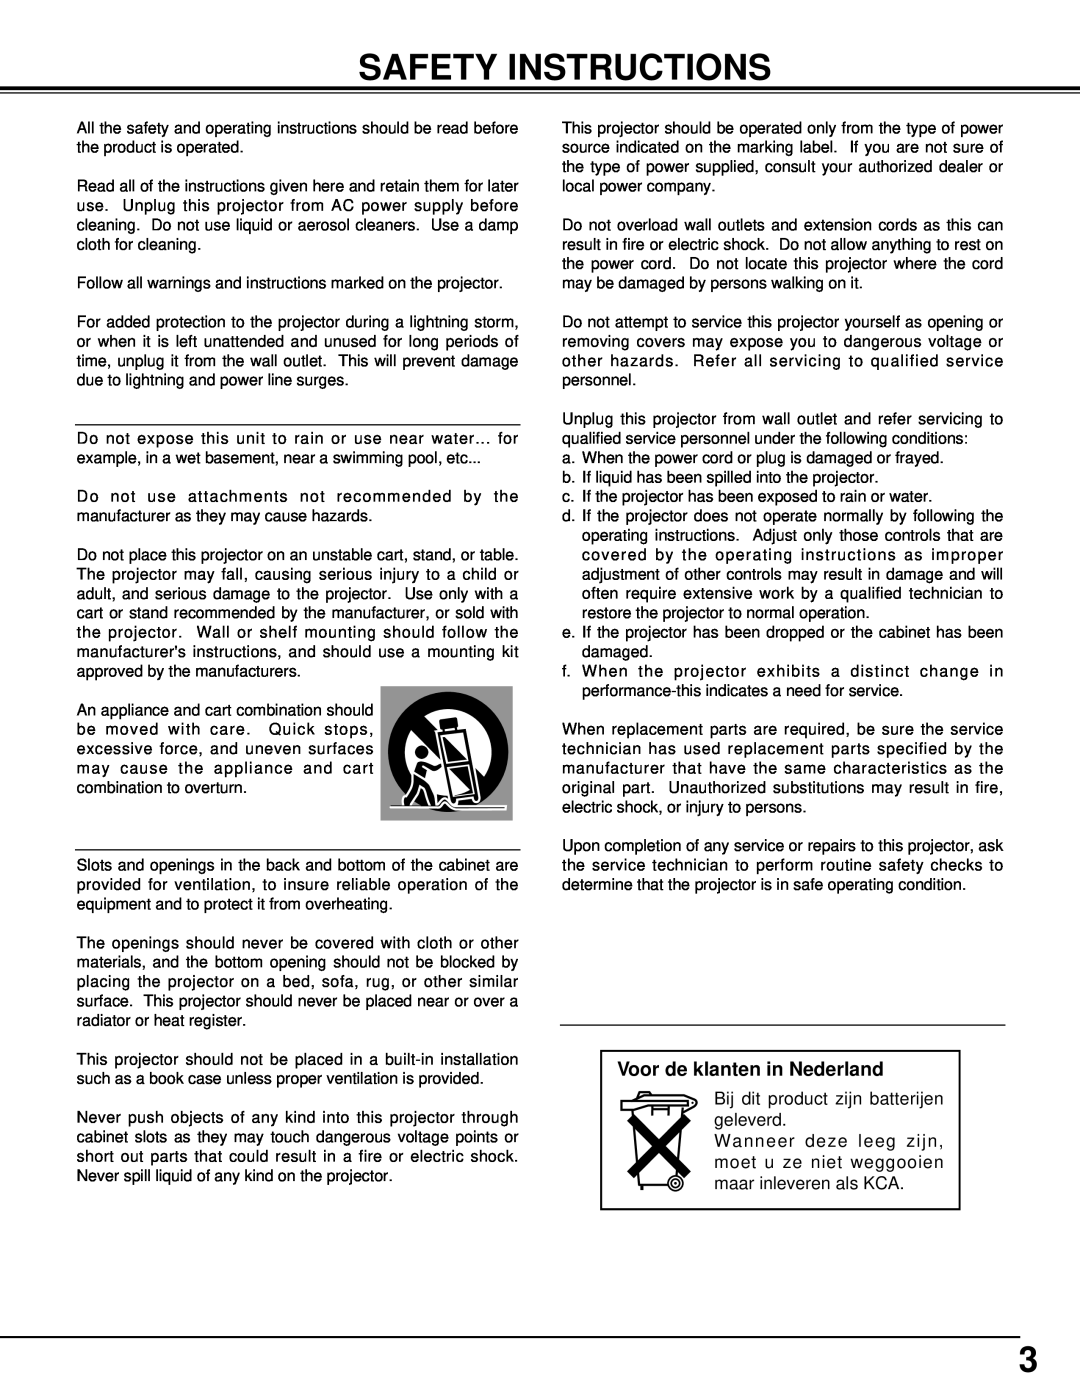 BOXLIGHT XP-5t manual Safety Instructions, Voor de klanten in Nederland 